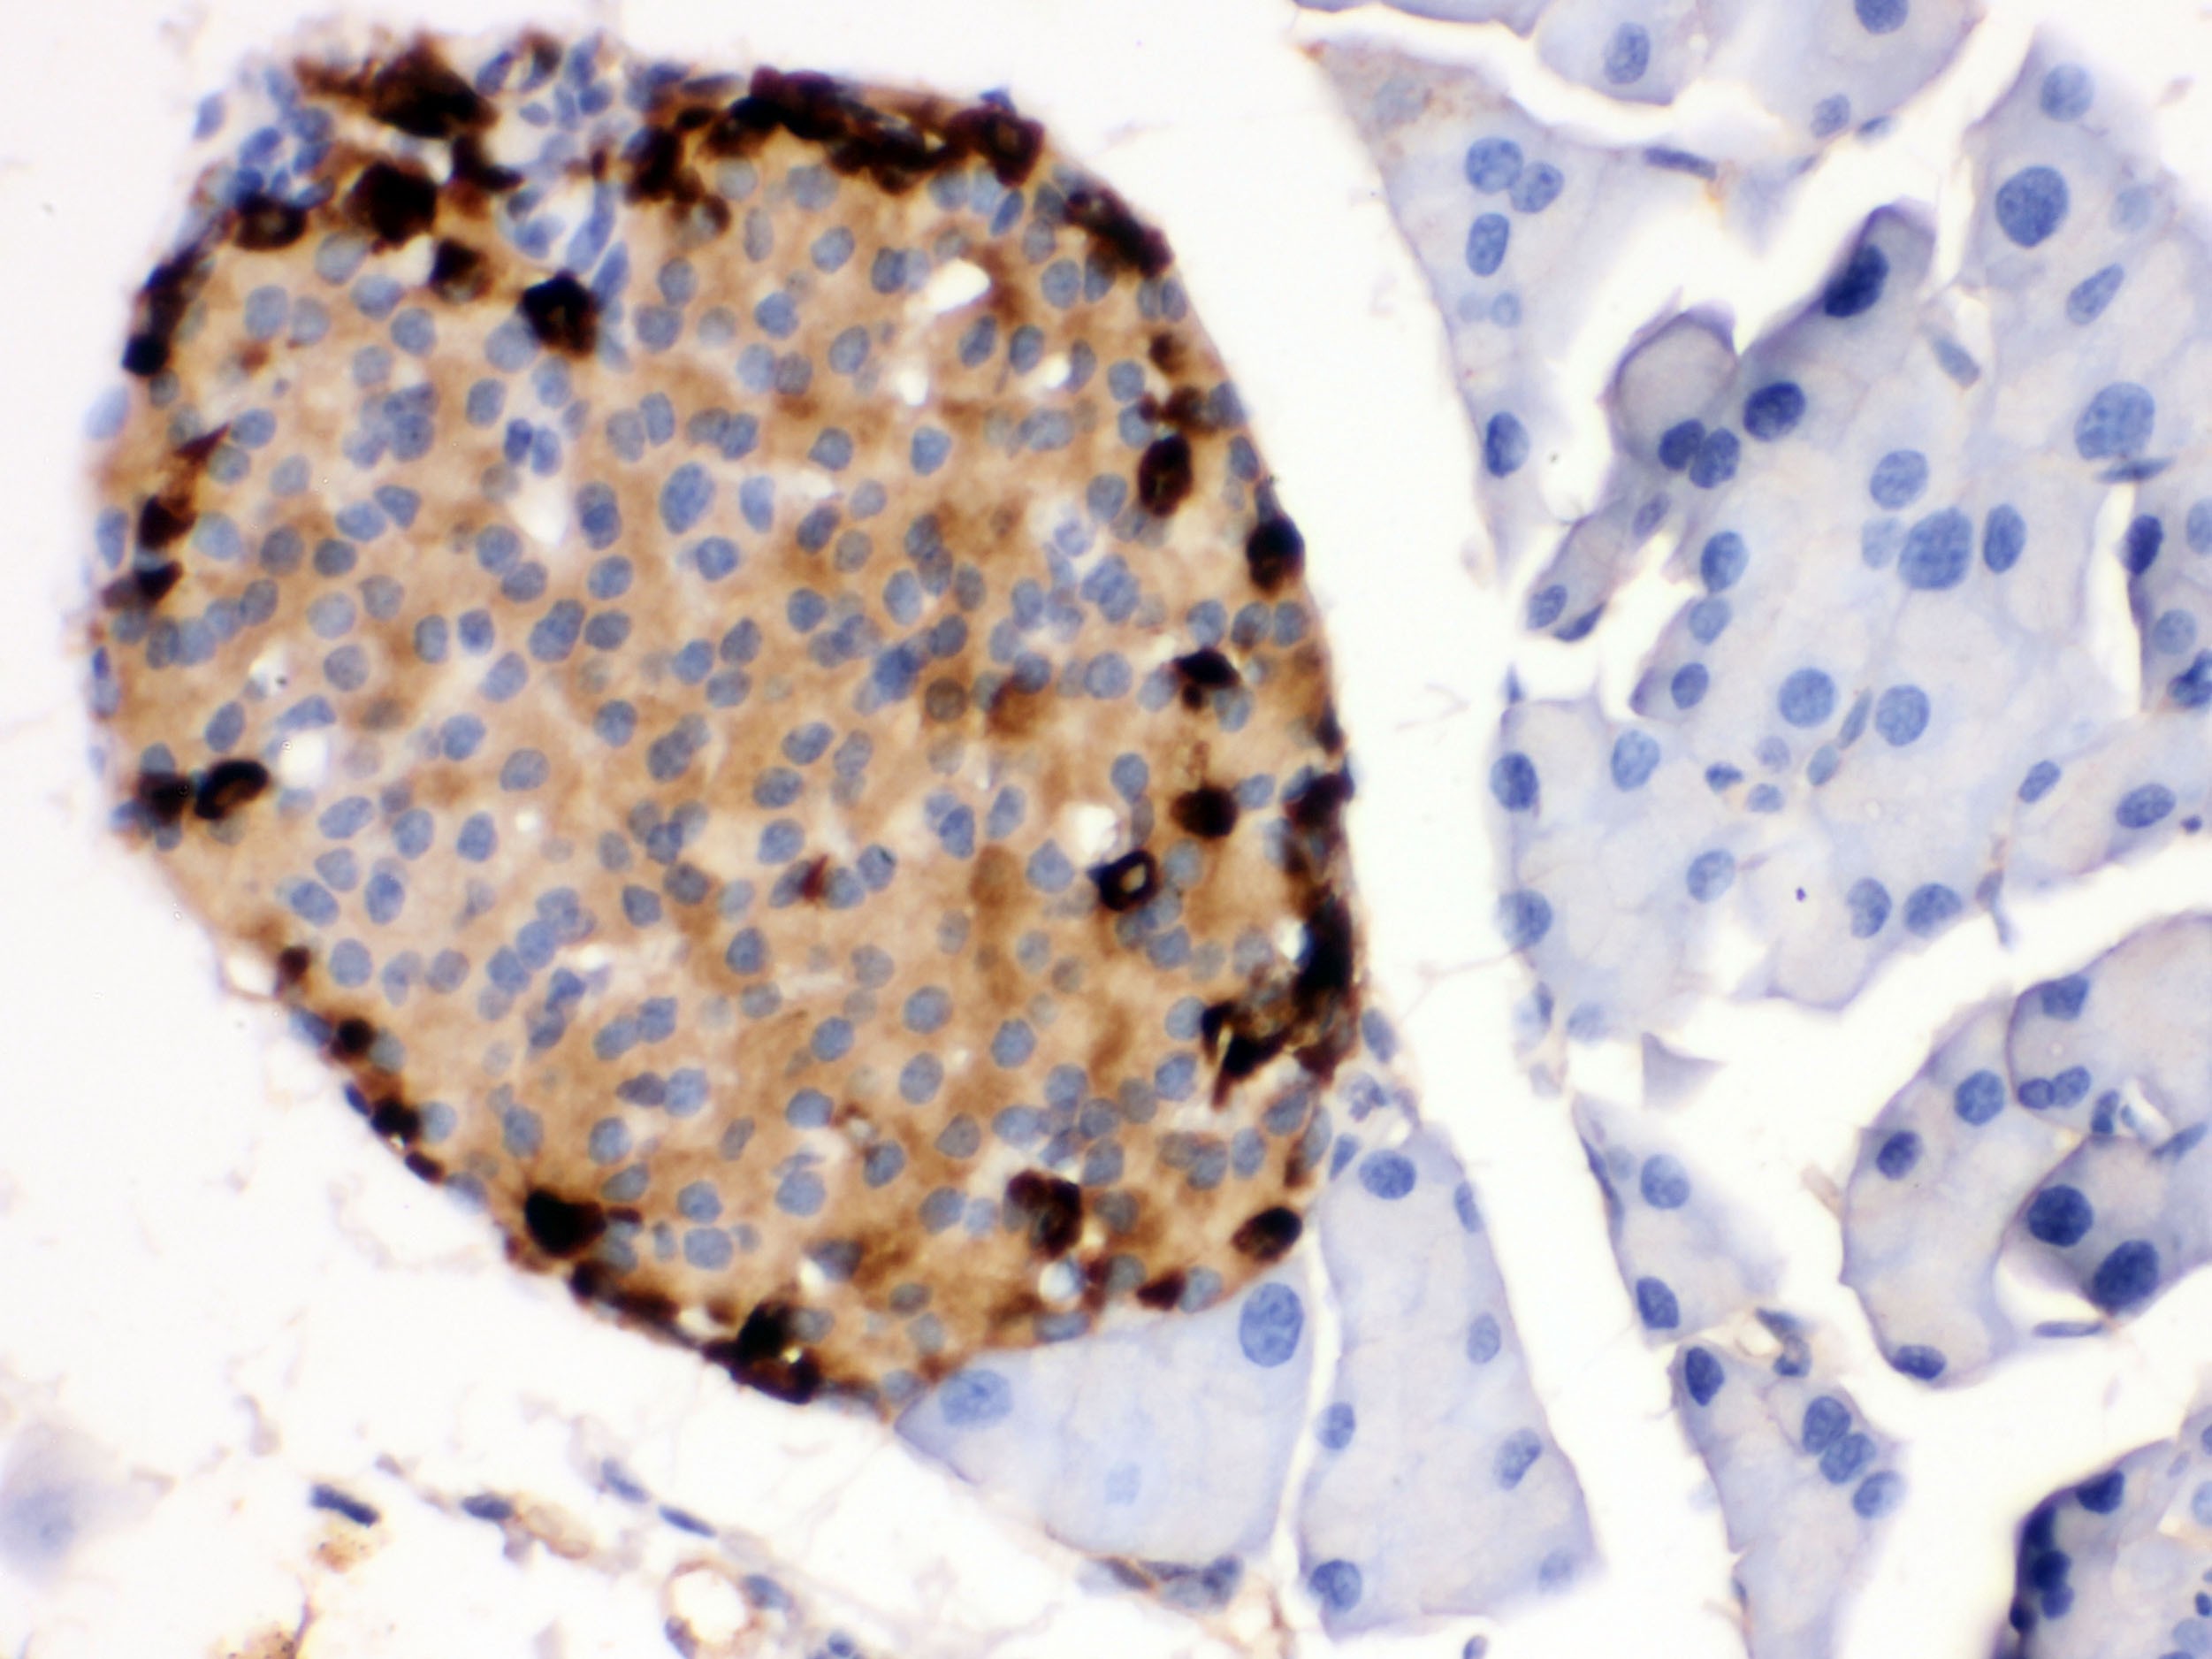 TTR Antibody (OABB02140) in Mouse Pancreas using Immunohistochemistry